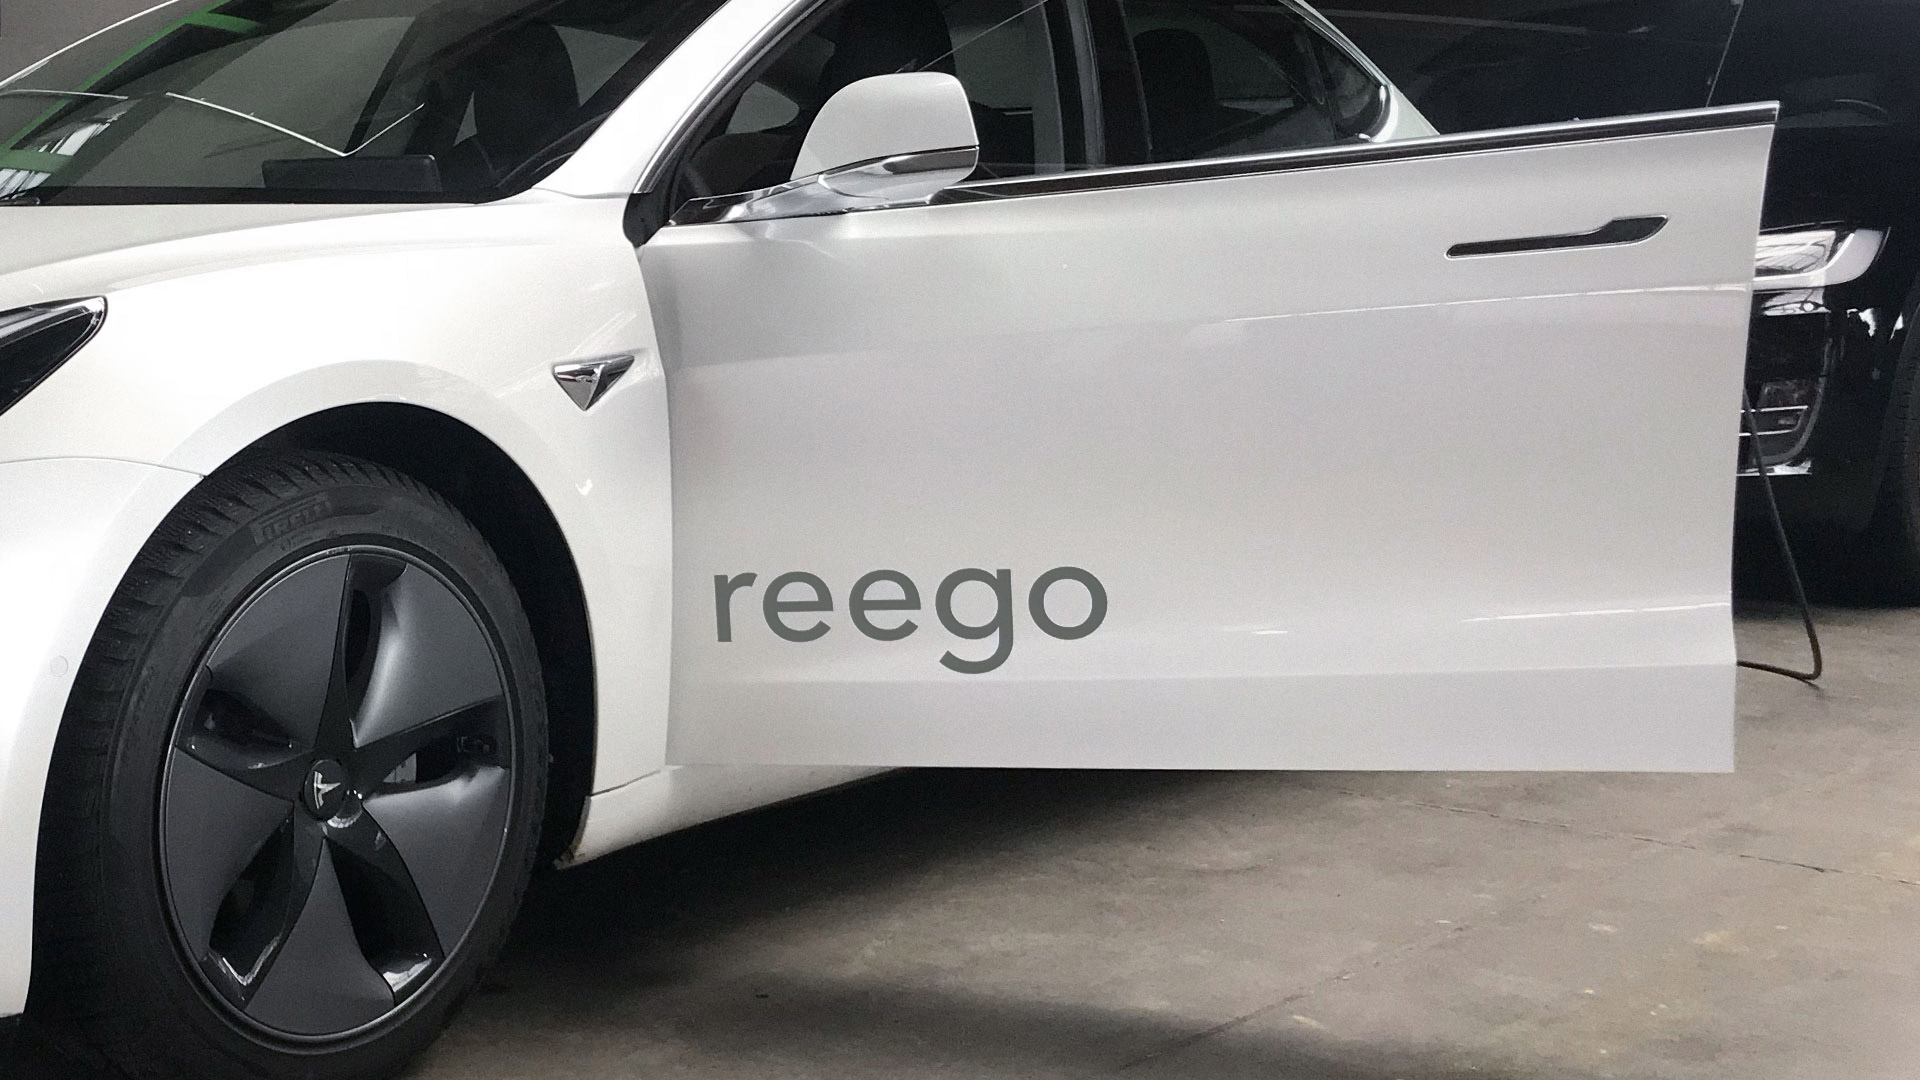 Gallery Reego wordmark on a white tesla car